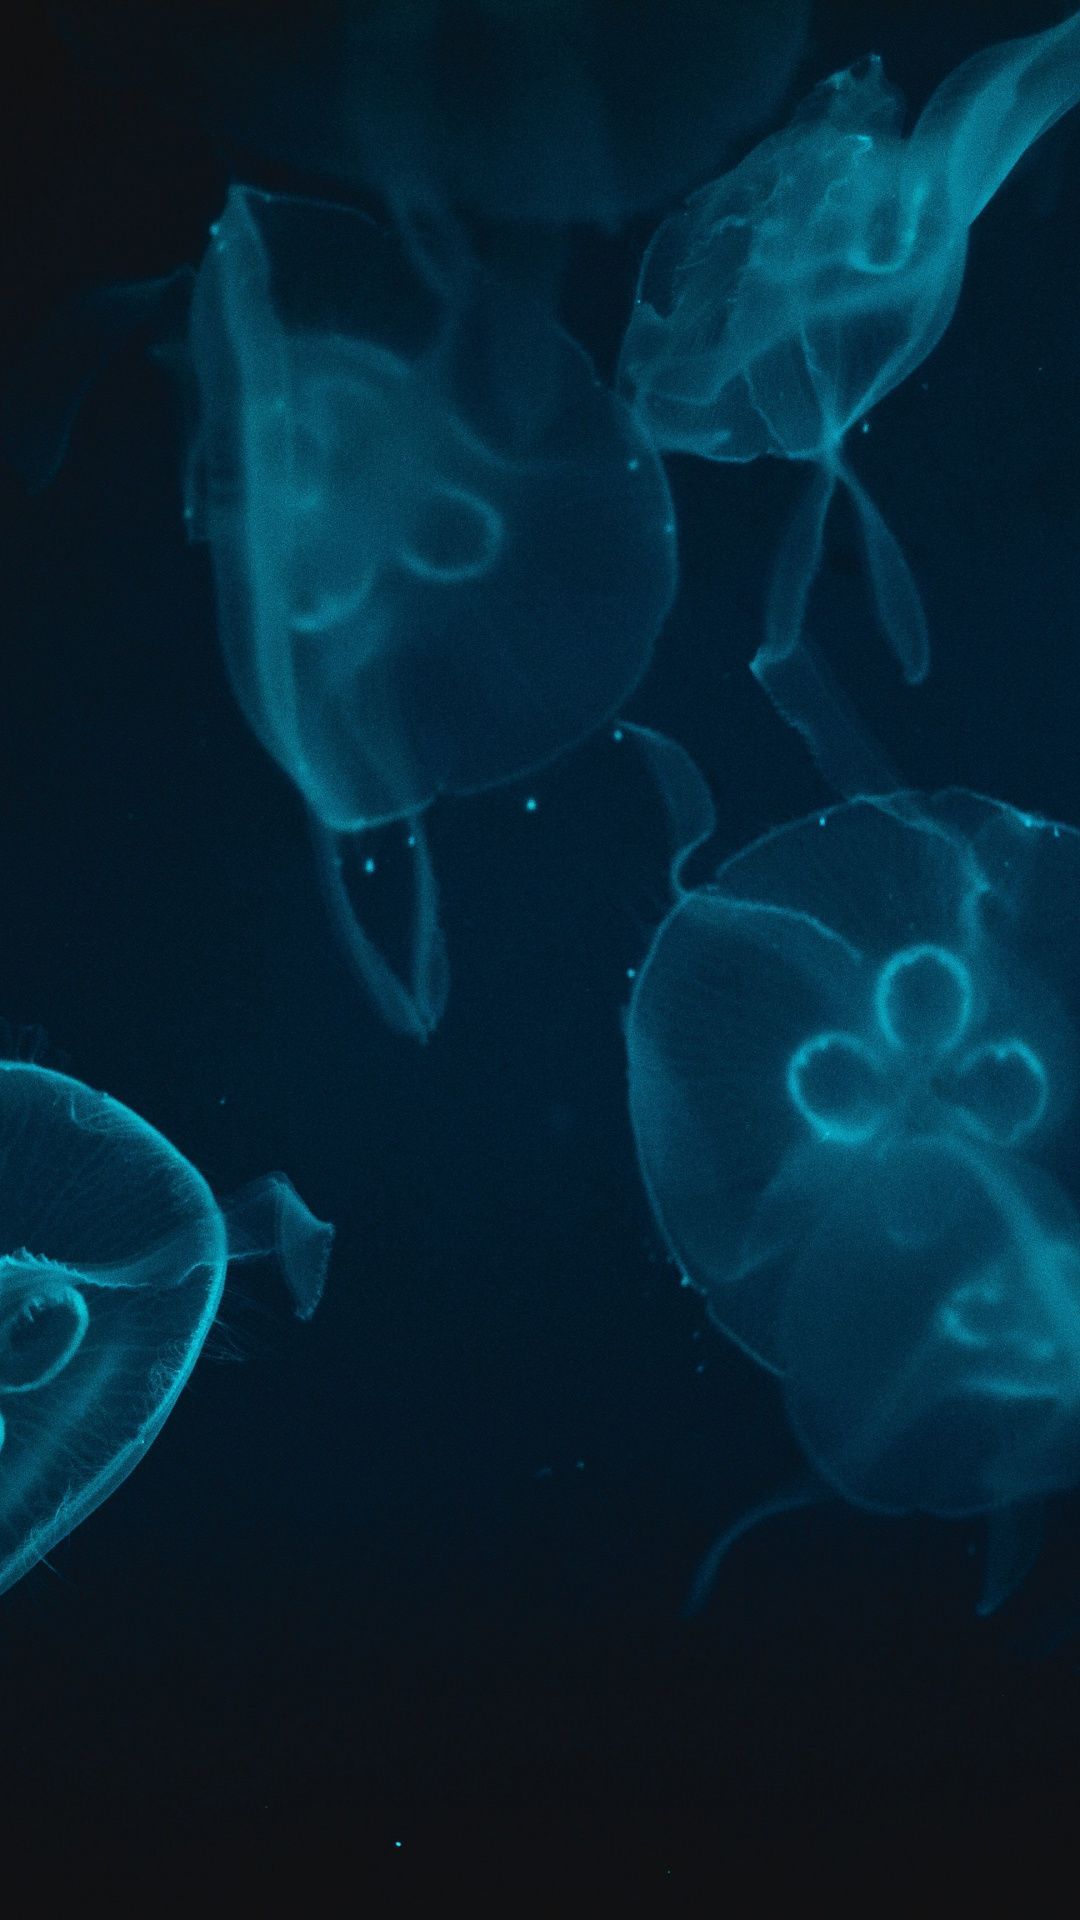 Jellyfish, underwater, aquatic life, 1080x1920 wallpaper. Animal wallpaper, Wallpaper, Desktop wallpaper